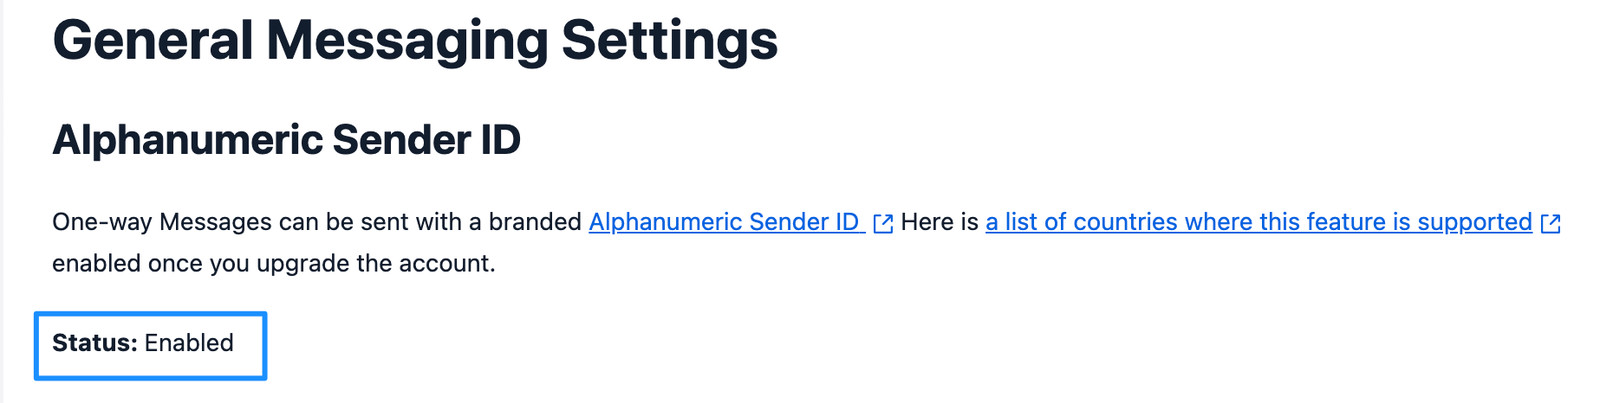 Alphanumeric Sender Feature Enabled.